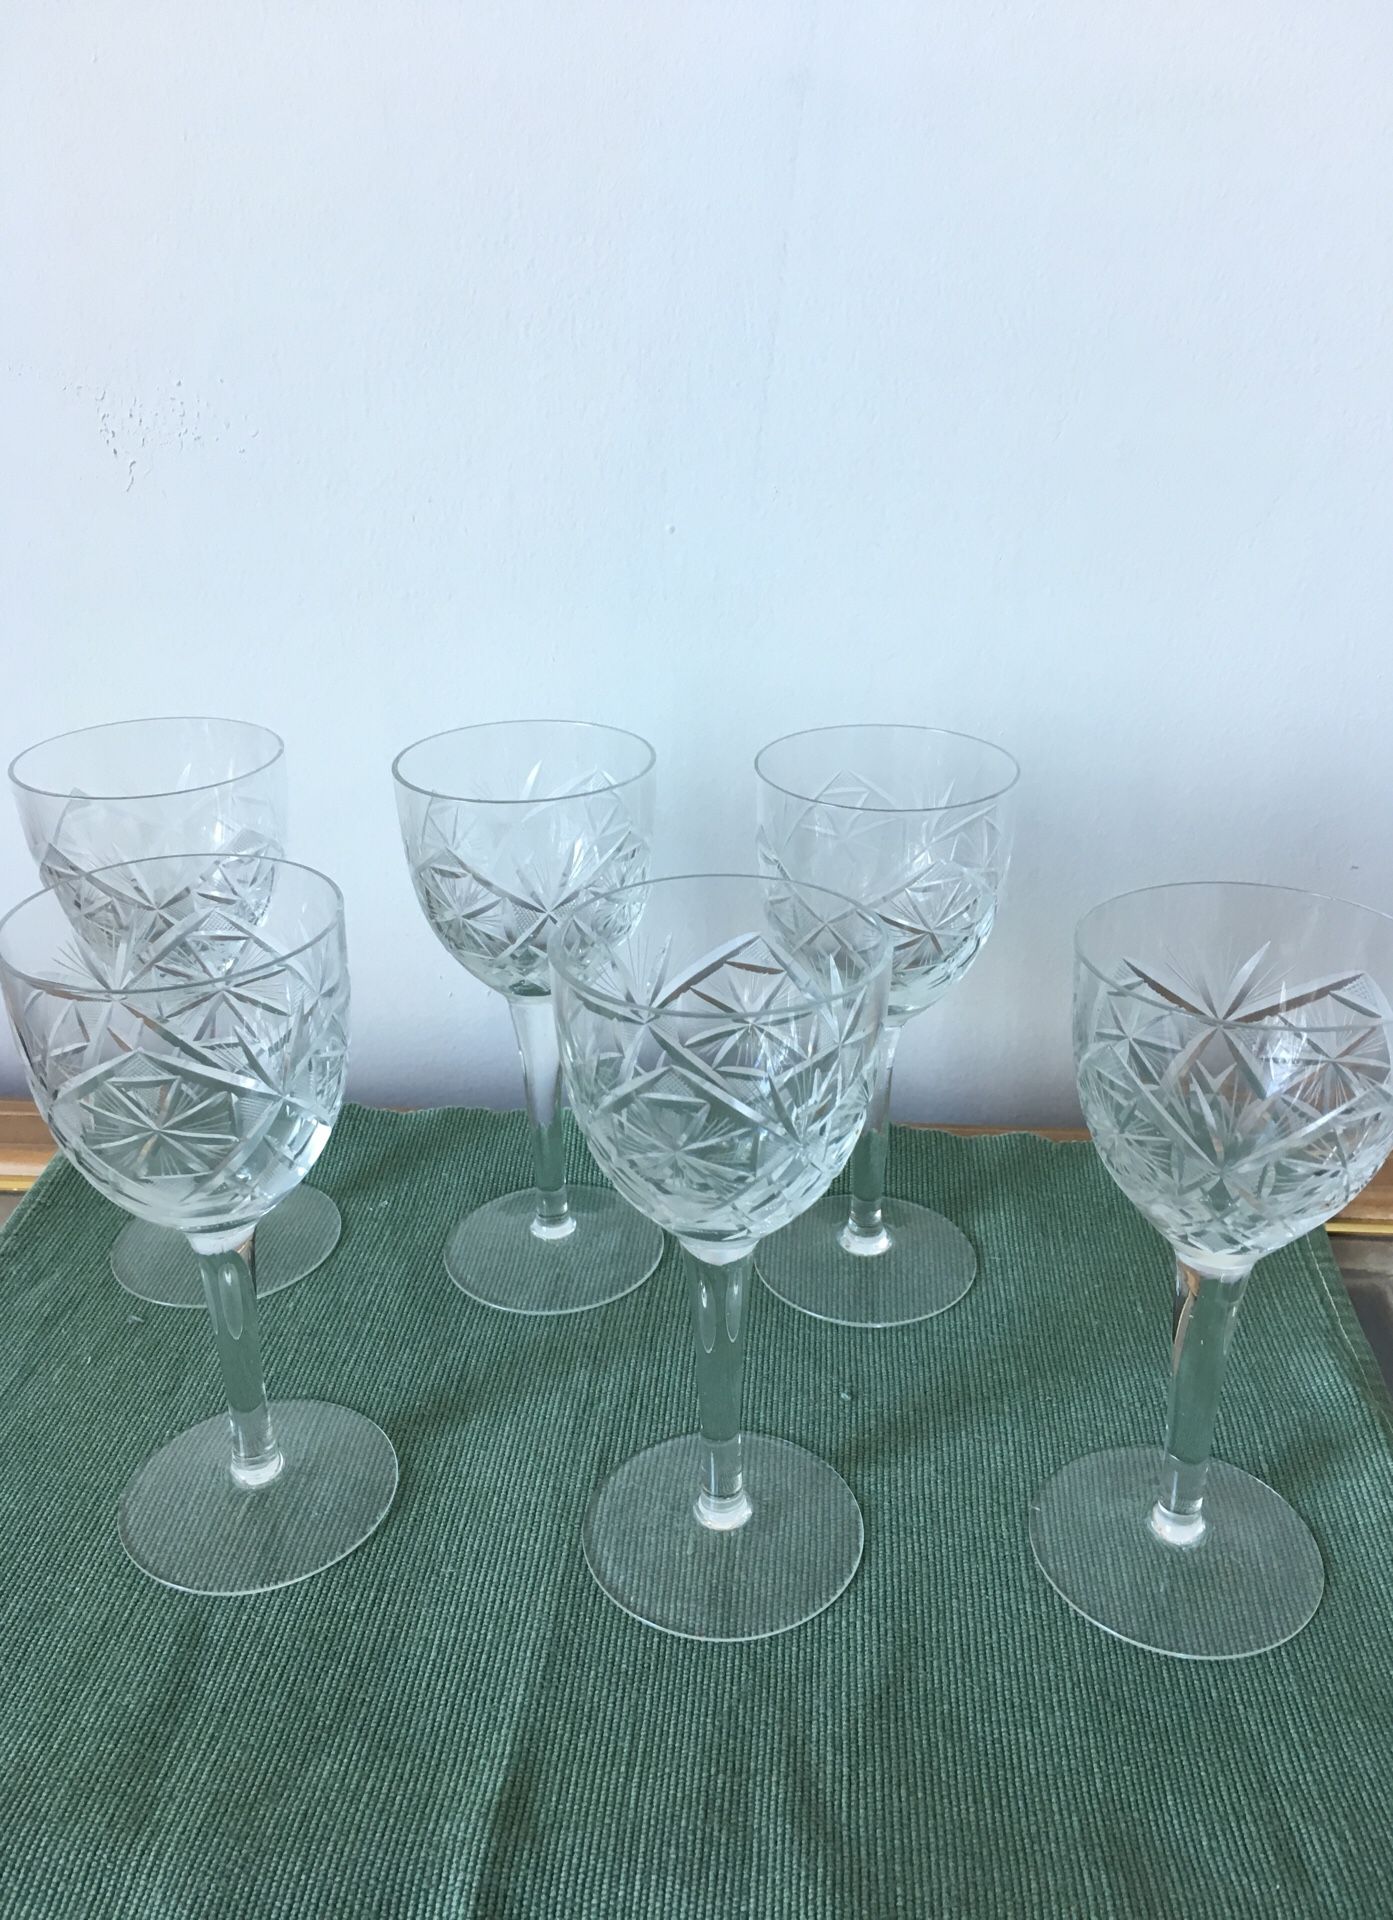 6 Antique, lead crystal wine glasses